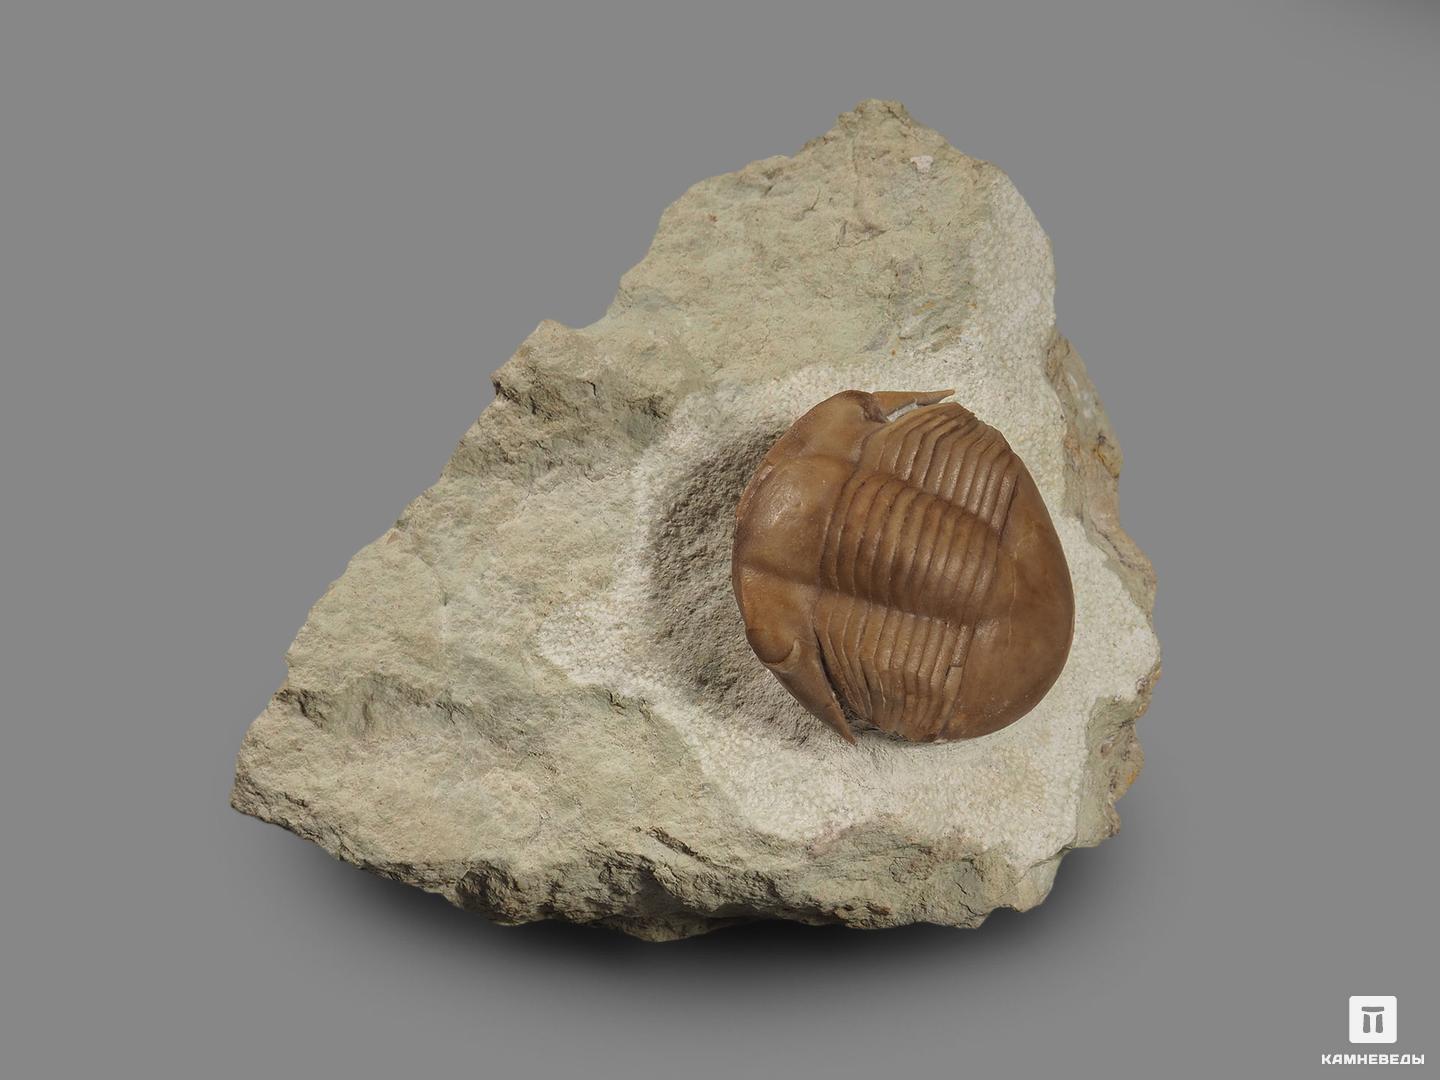 Трилобит illaenus schmidti (NIESZKOWSKI 1857) на породе, 11х7,7х4,4 см, 18494, фото 3